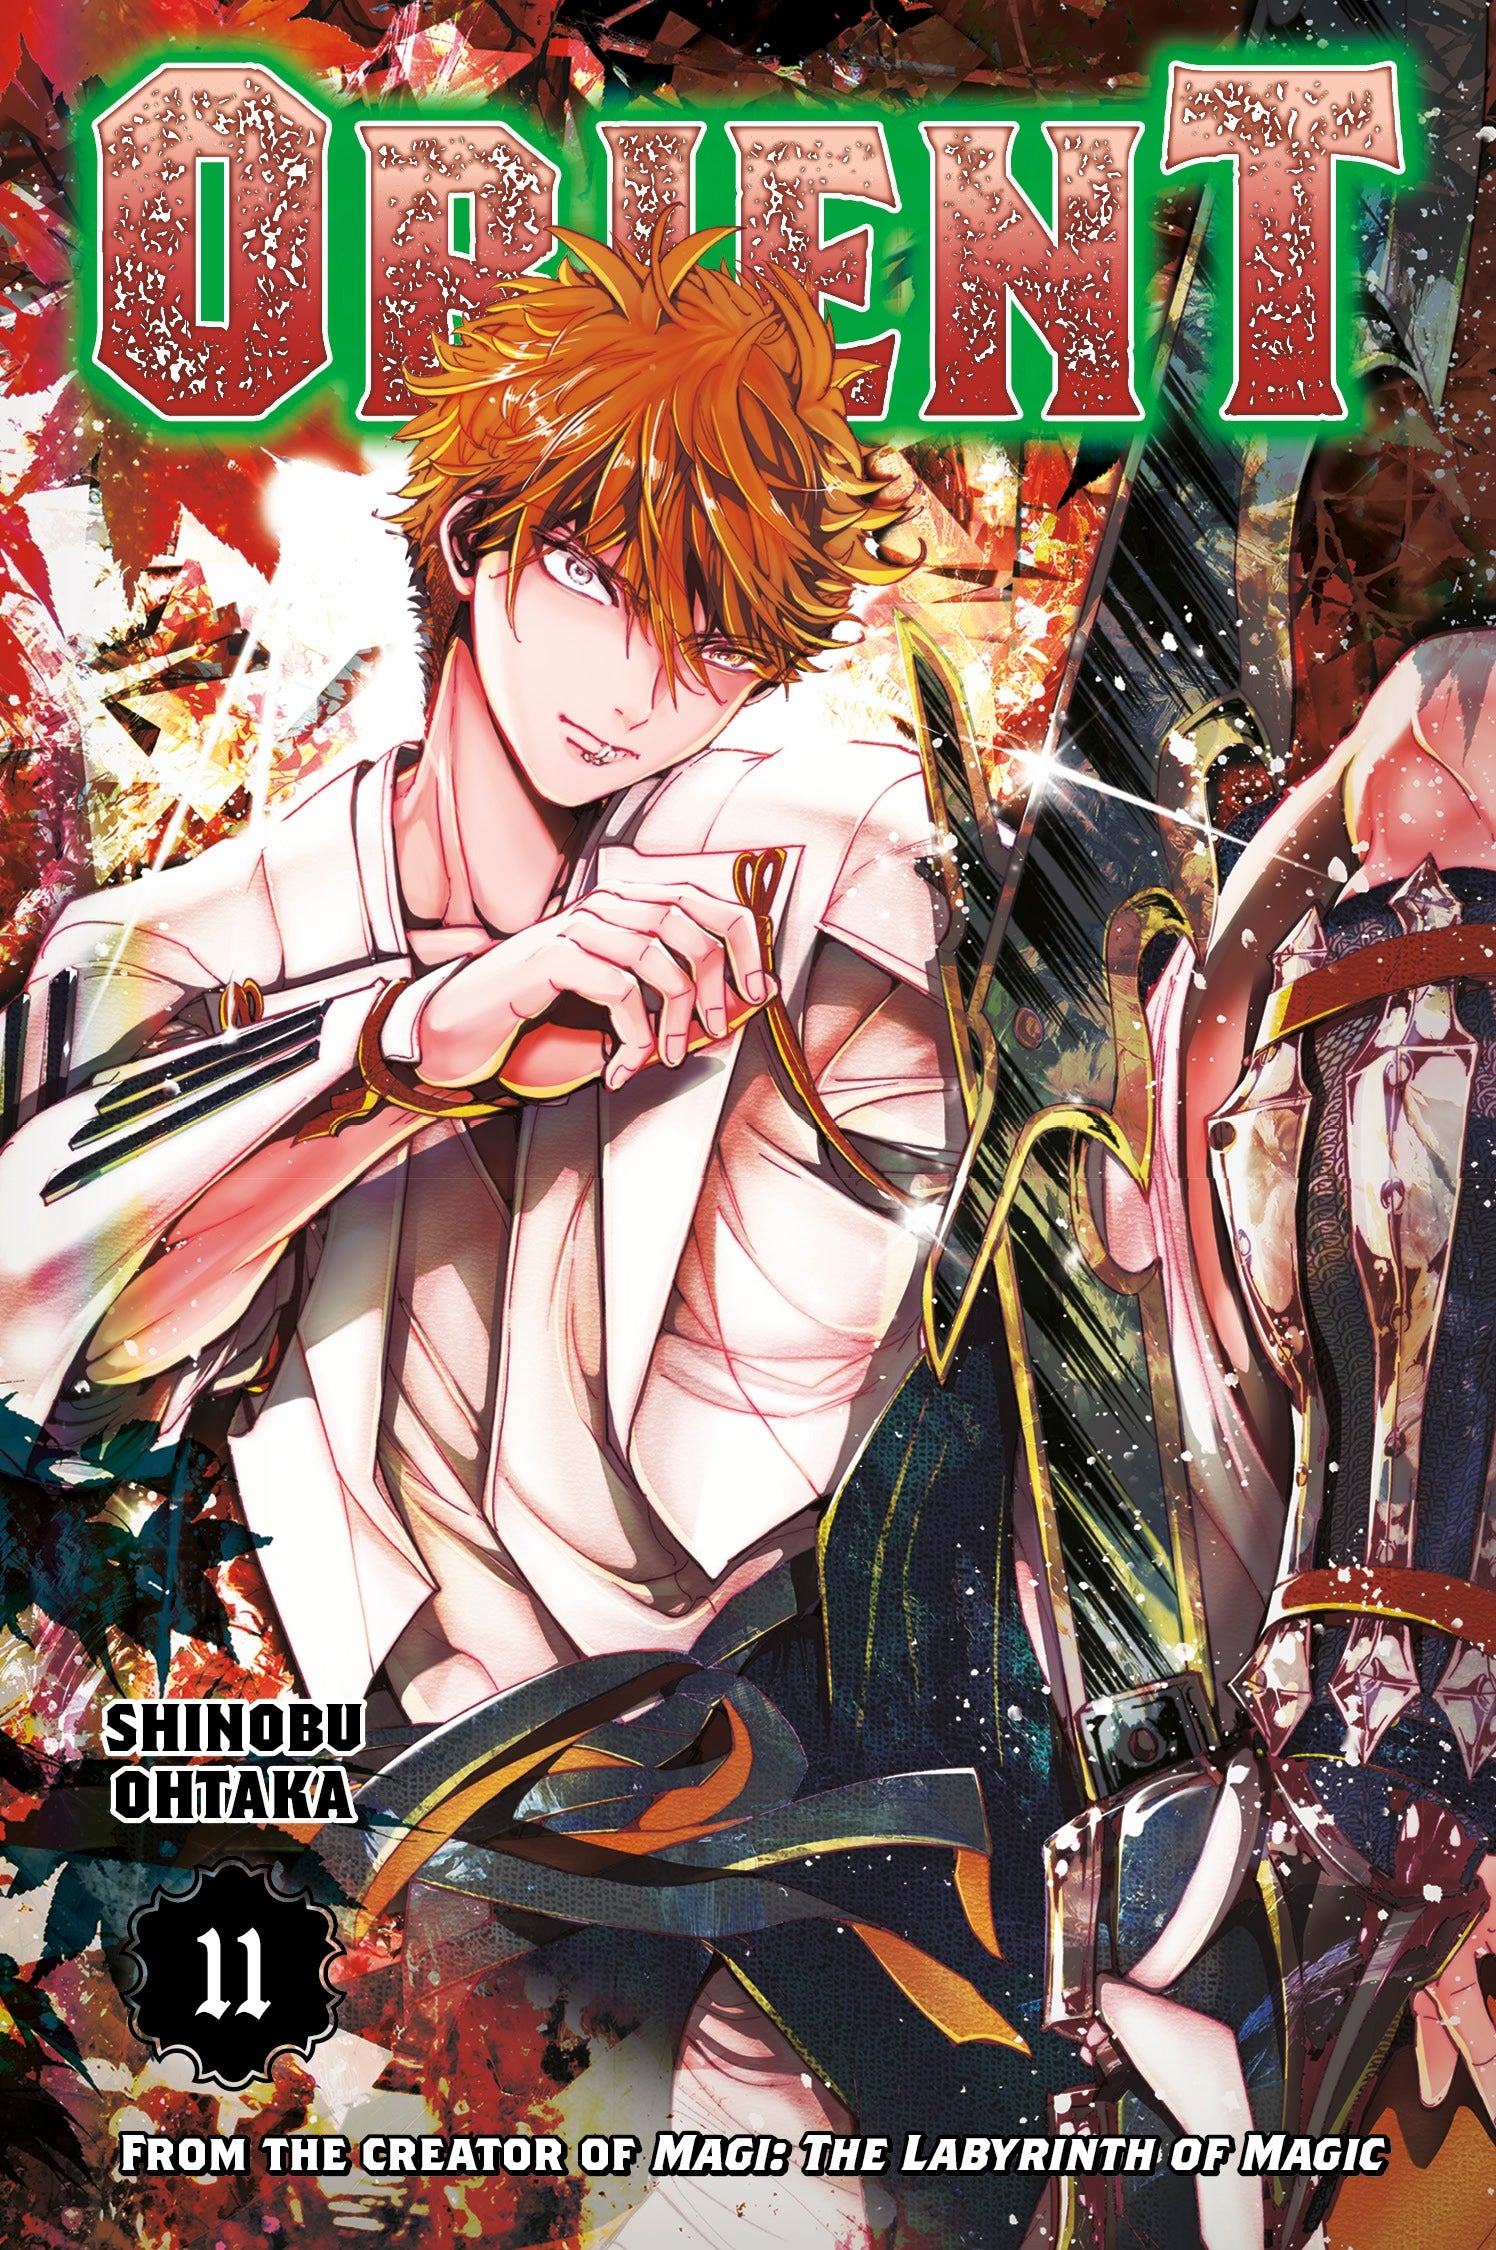 Juni Taisen: Zodiac War #4 - Vol. 4 (Issue)